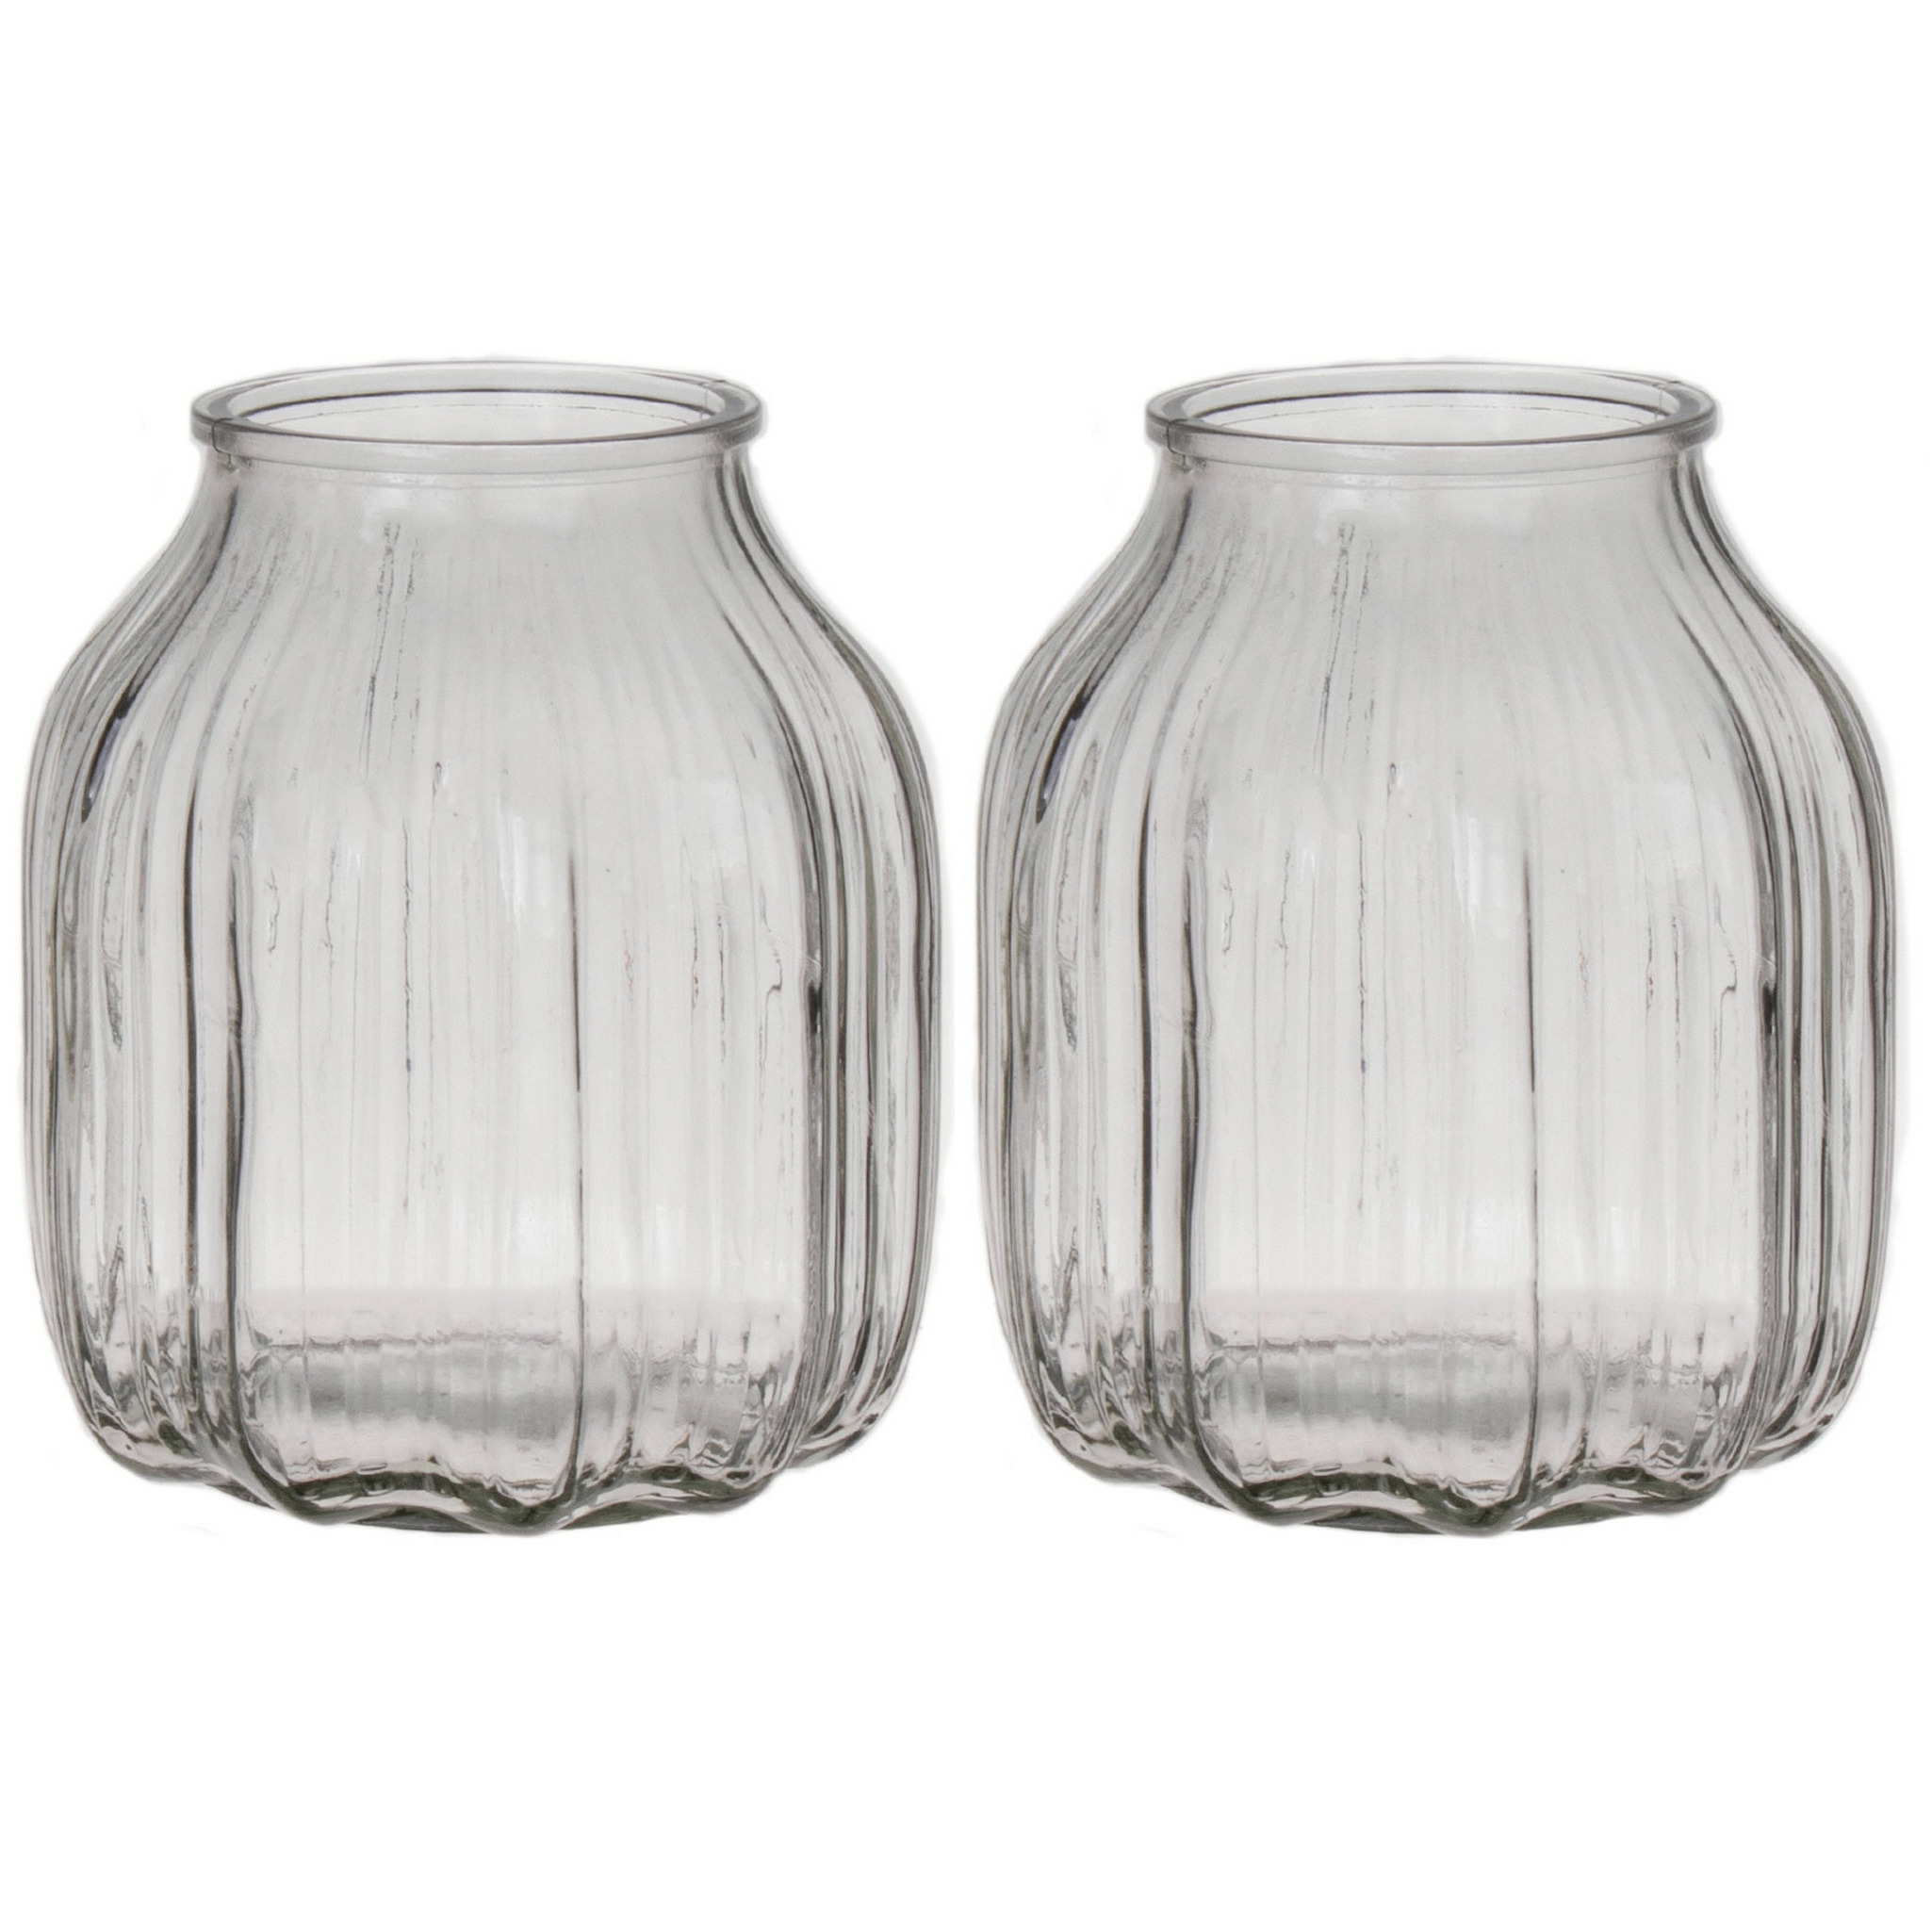 Bellatio Design Bloemenvaas klein - set van 2x - helder - transparant glas - D14 x H16 cm -